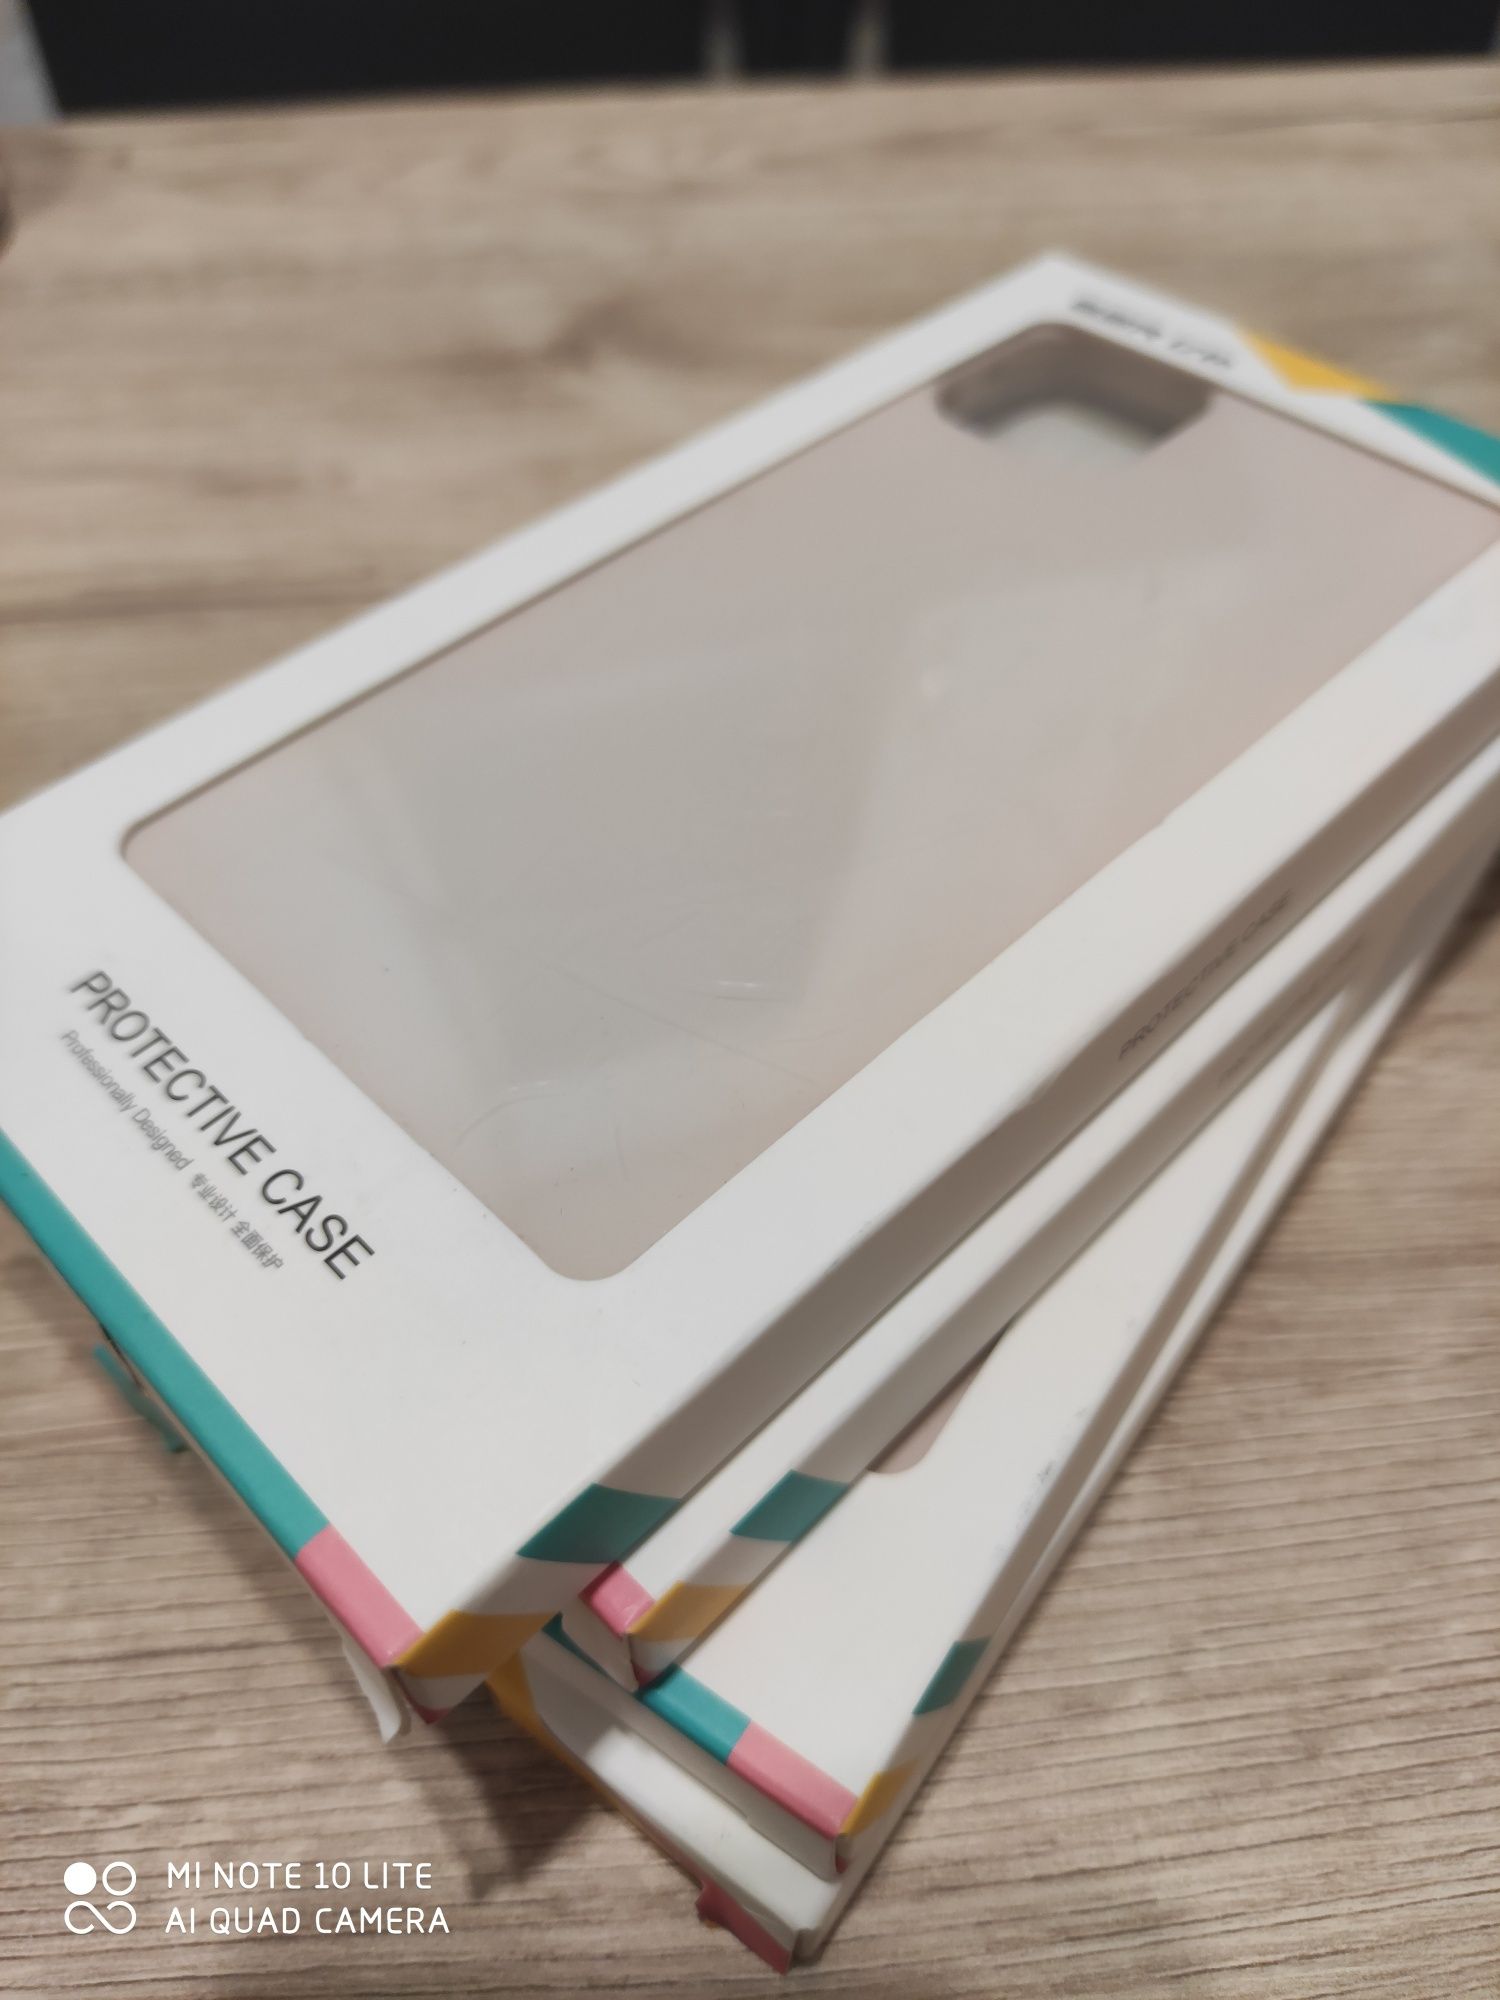 Vând husa silicon iPhone 6.1 2019 Pink new